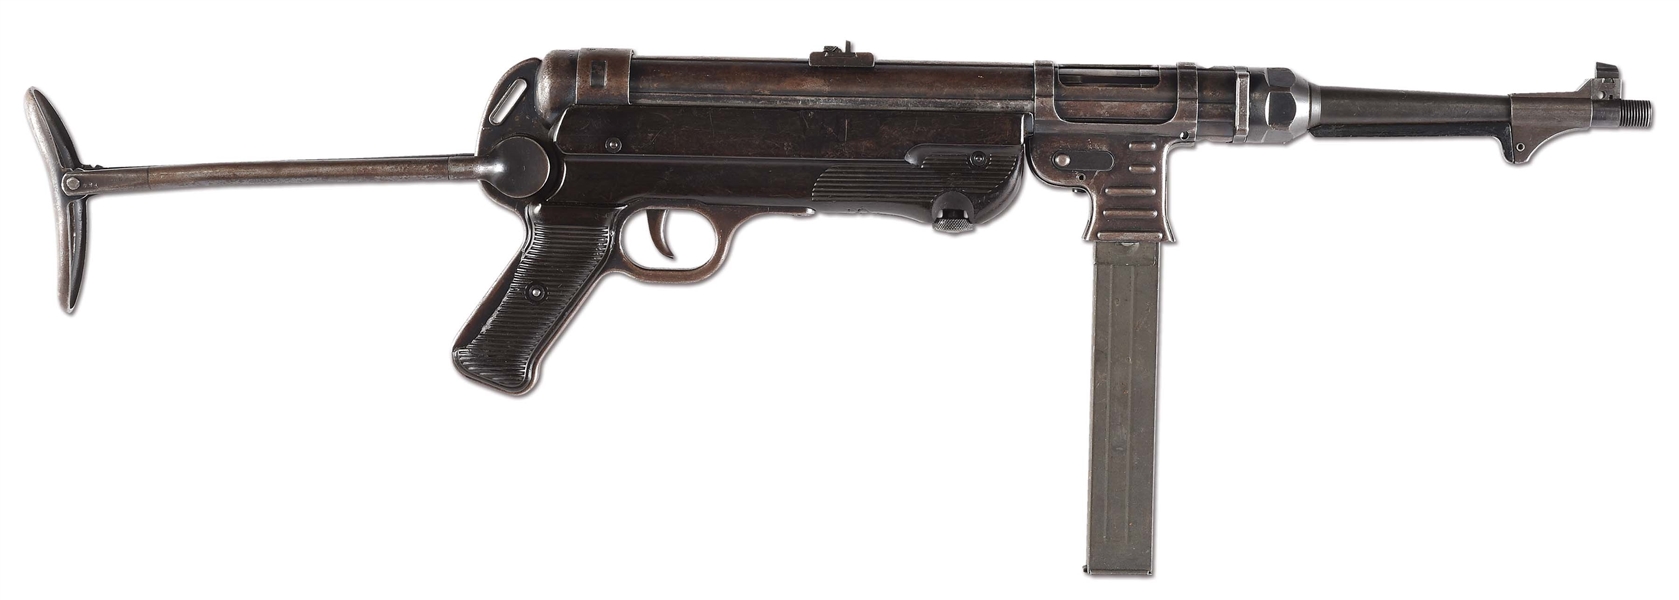 (N) MATCHING ORIGINAL GERMAN WWII MP-40 MACHINE GUN (CURIO & RELIC) (DEACTIVATED STATUS).